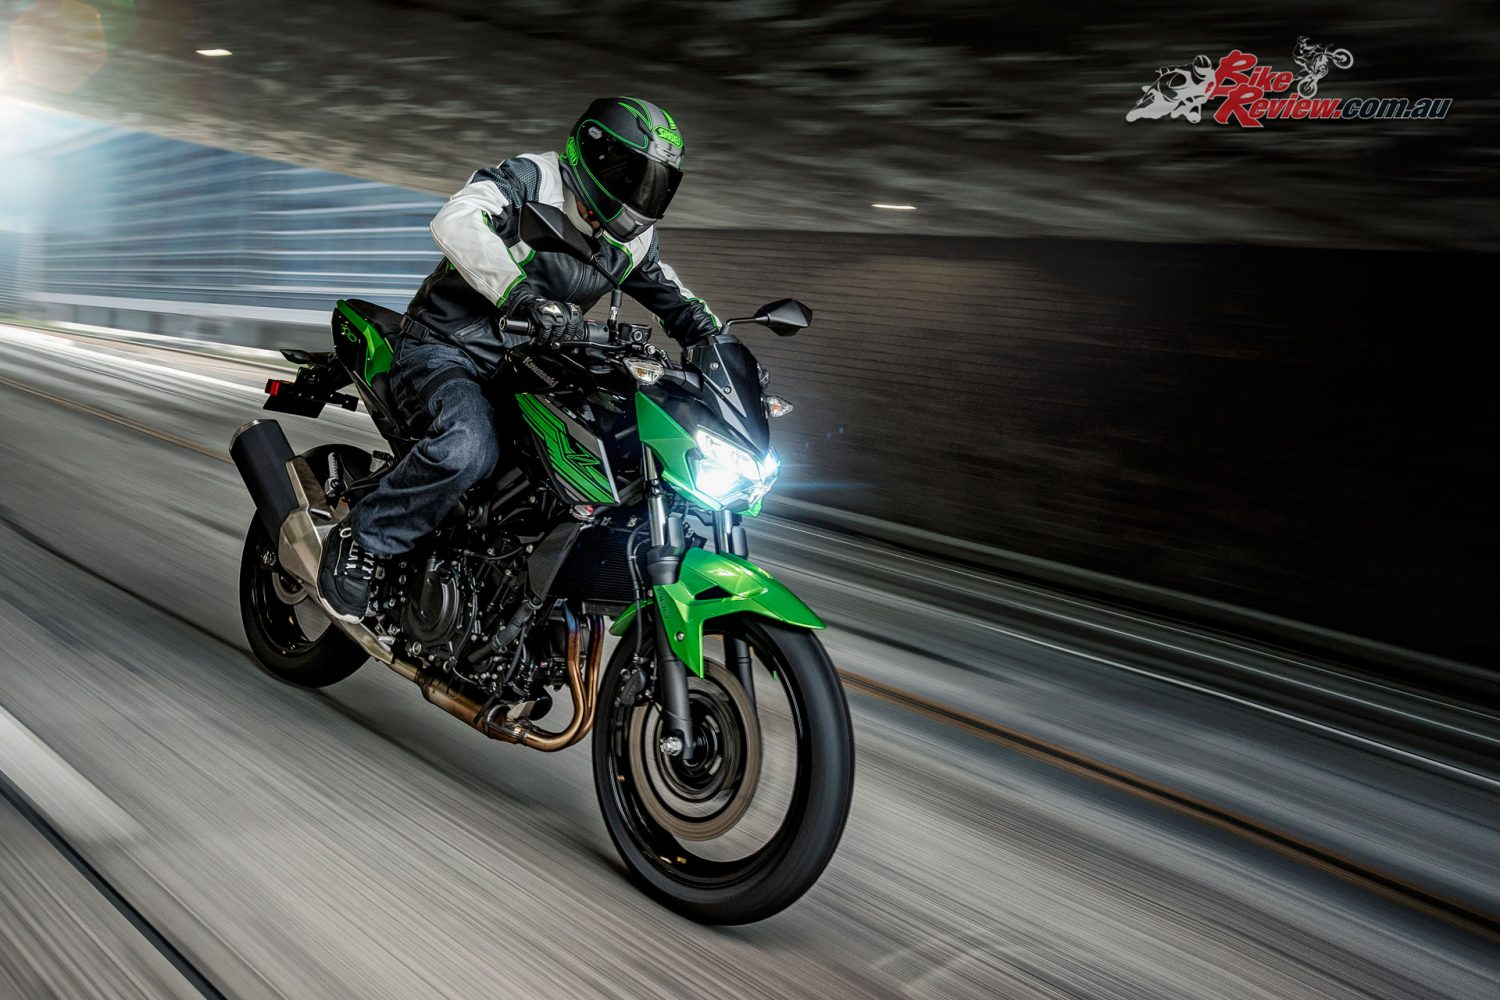 Kawasaki announce the Z400 LAMS nakedbike for 2019